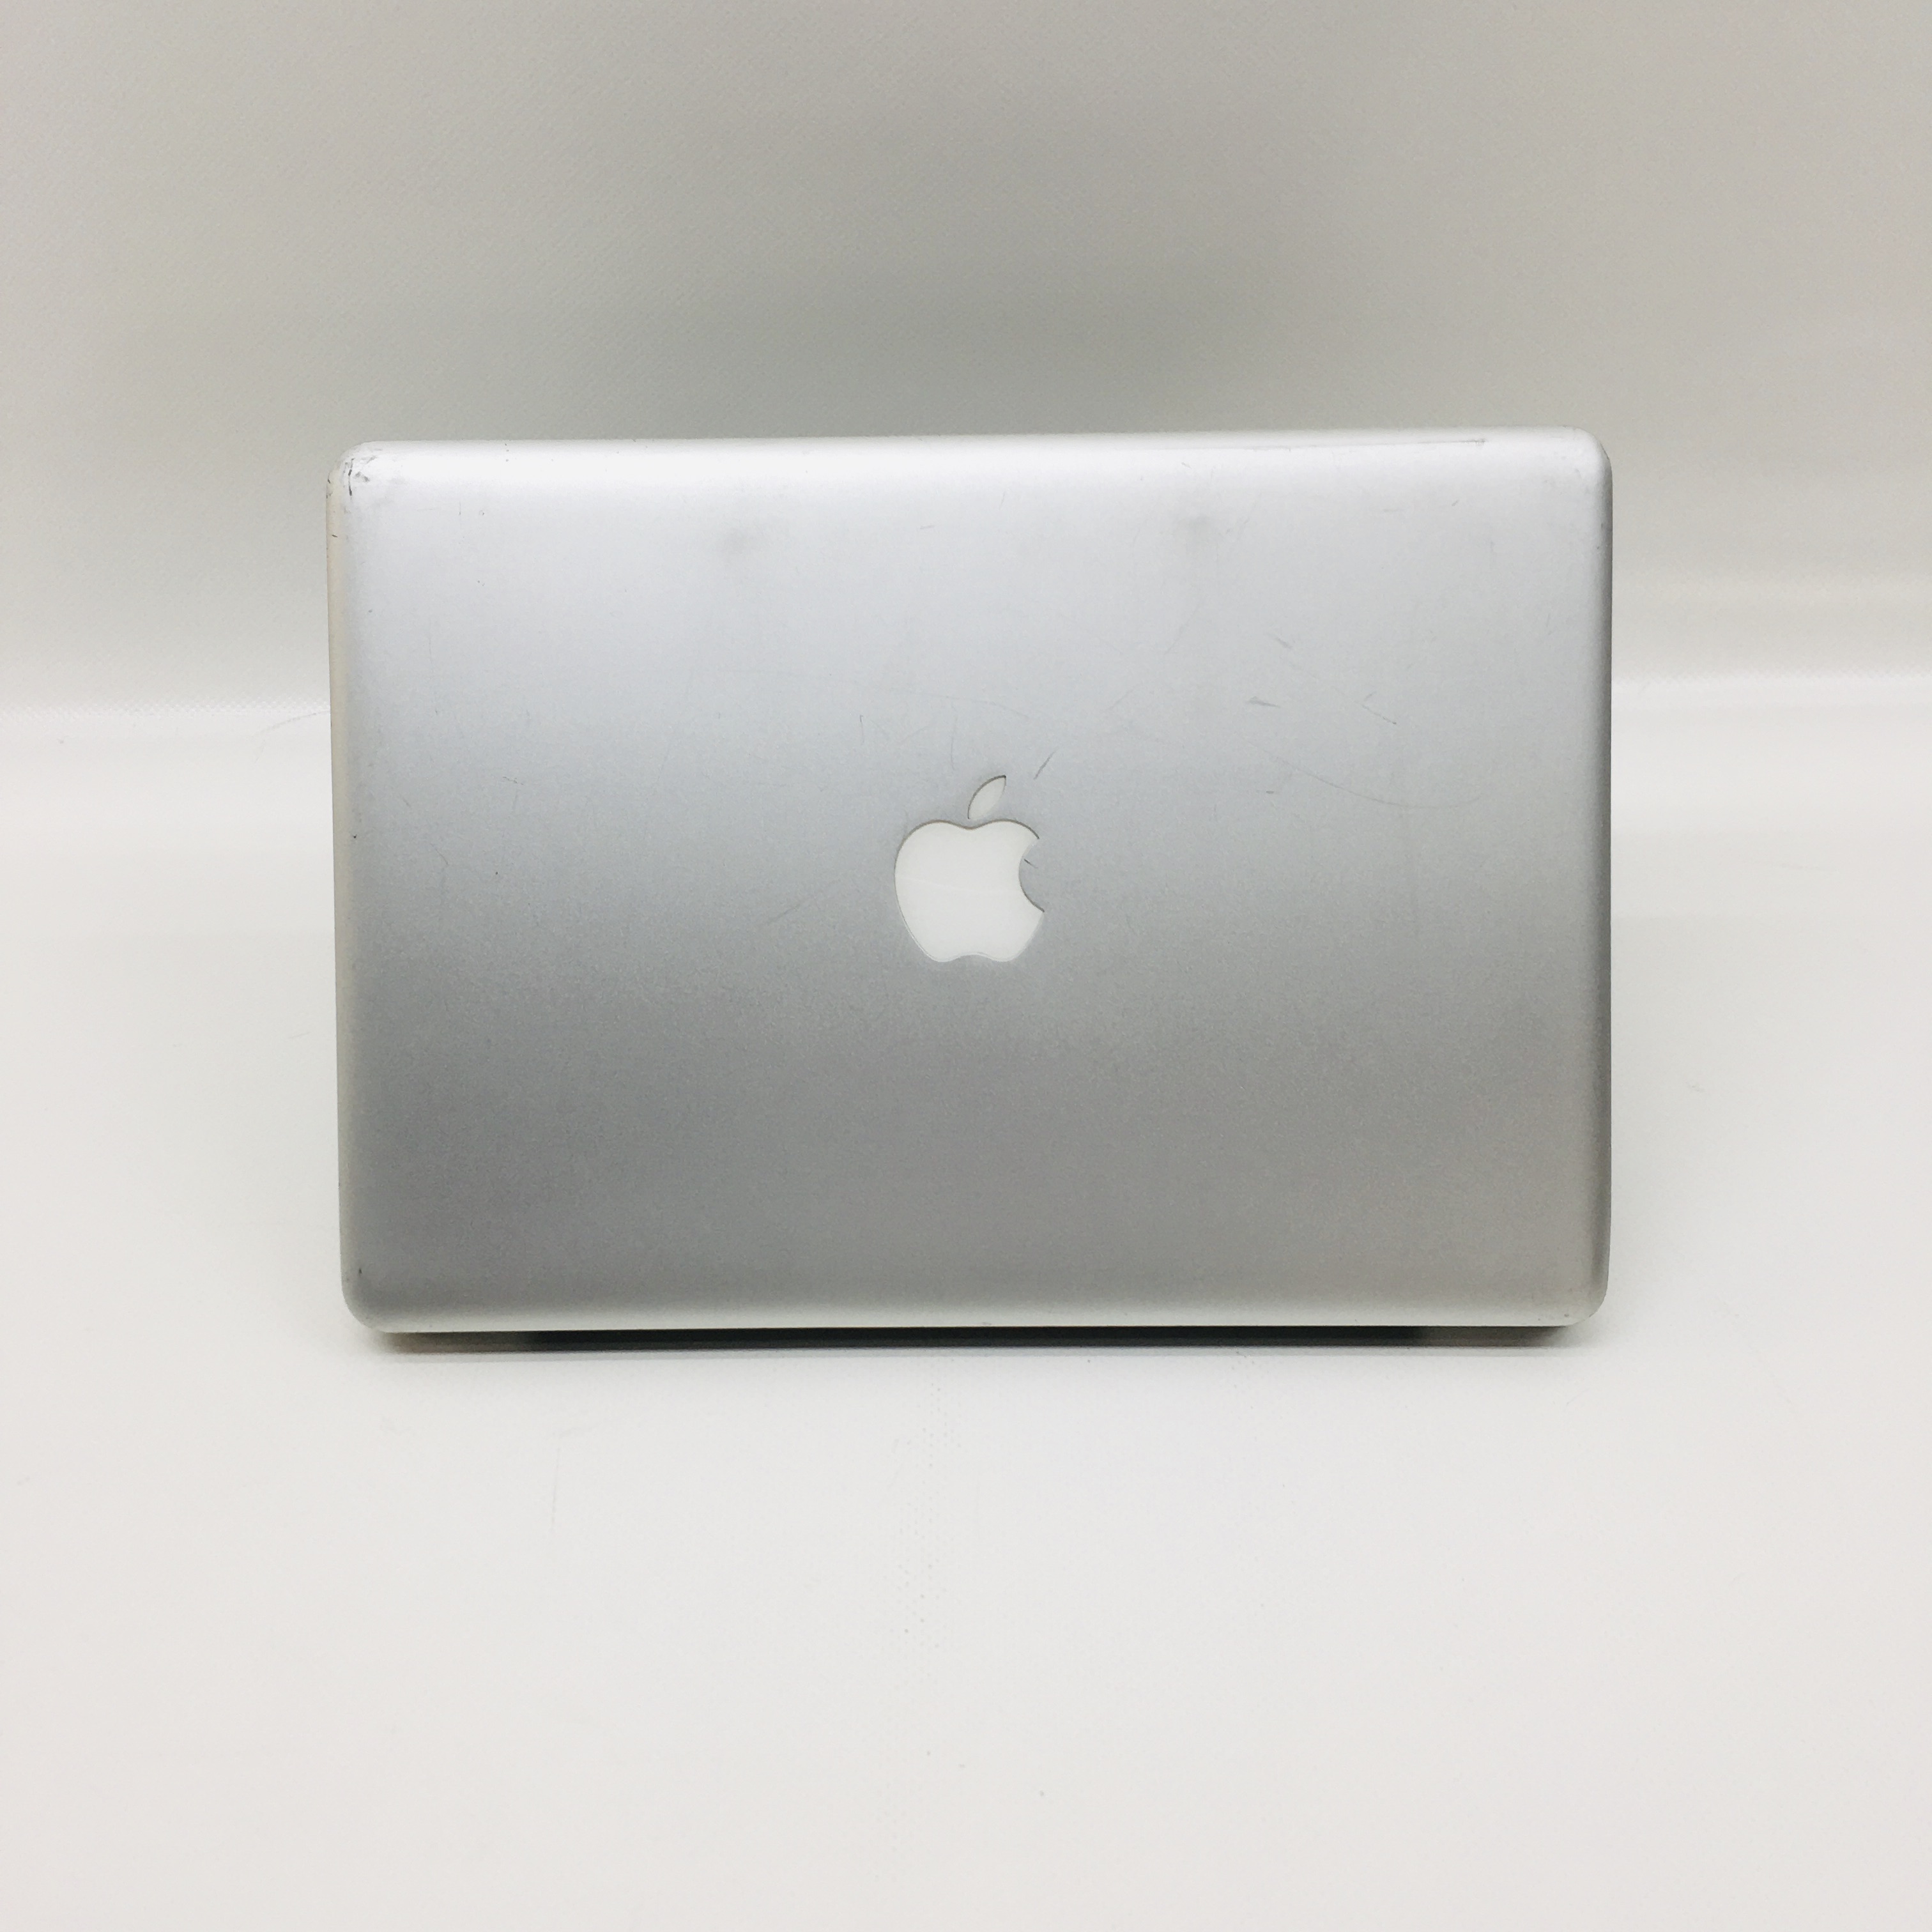 MacBook Pro 13" Late 2011 (Intel Core i5 2.4 GHz 4 GB RAM 500 GB HDD), Intel Core i5 2.4 GHz, 4 GB RAM, 500 GB HDD, image 4